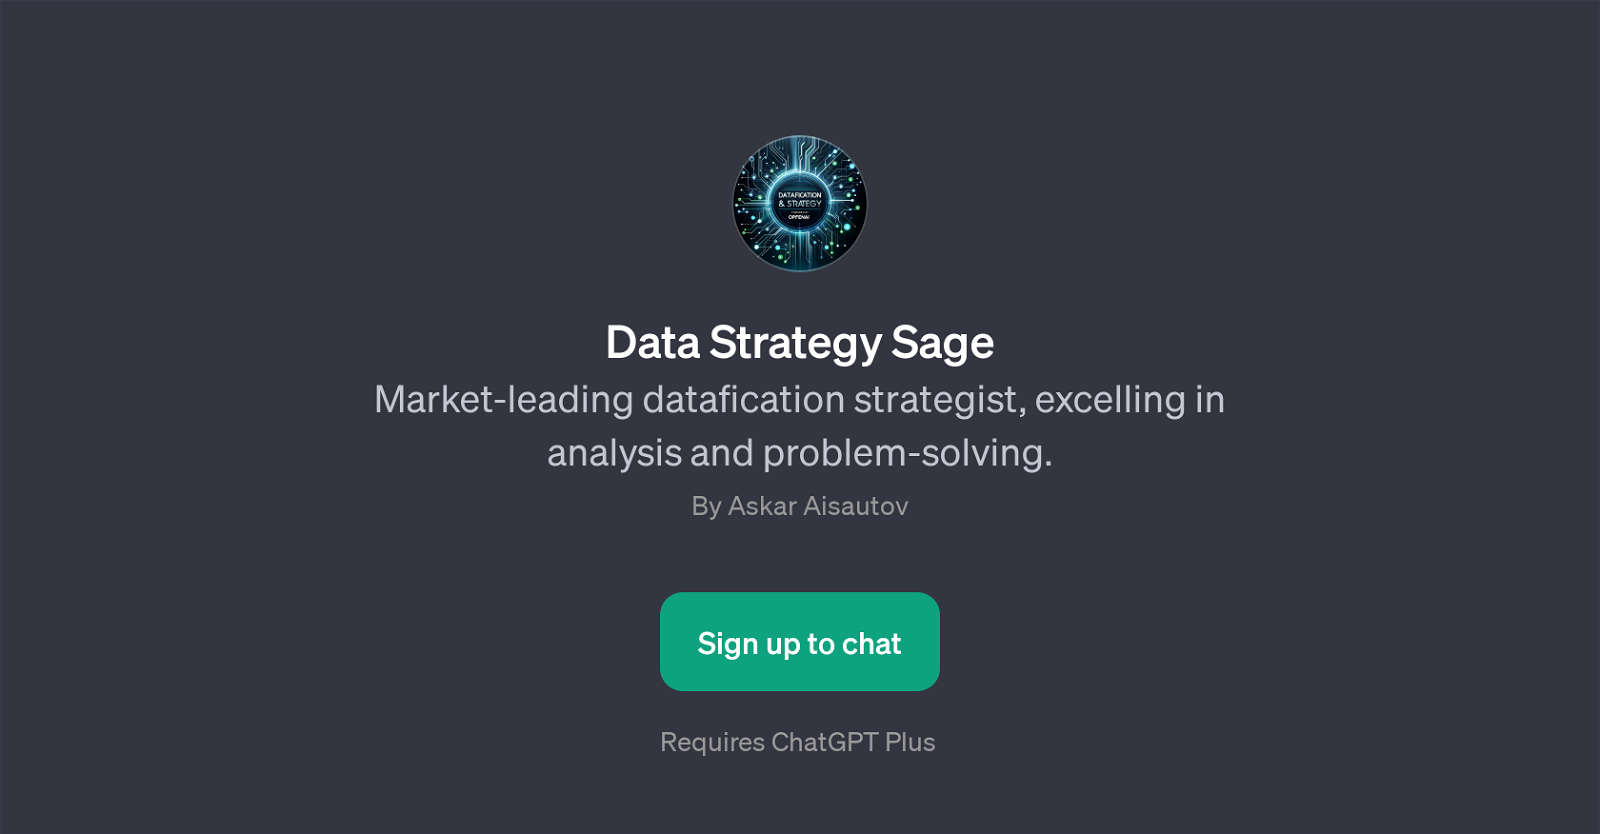 Data Strategy Sage website